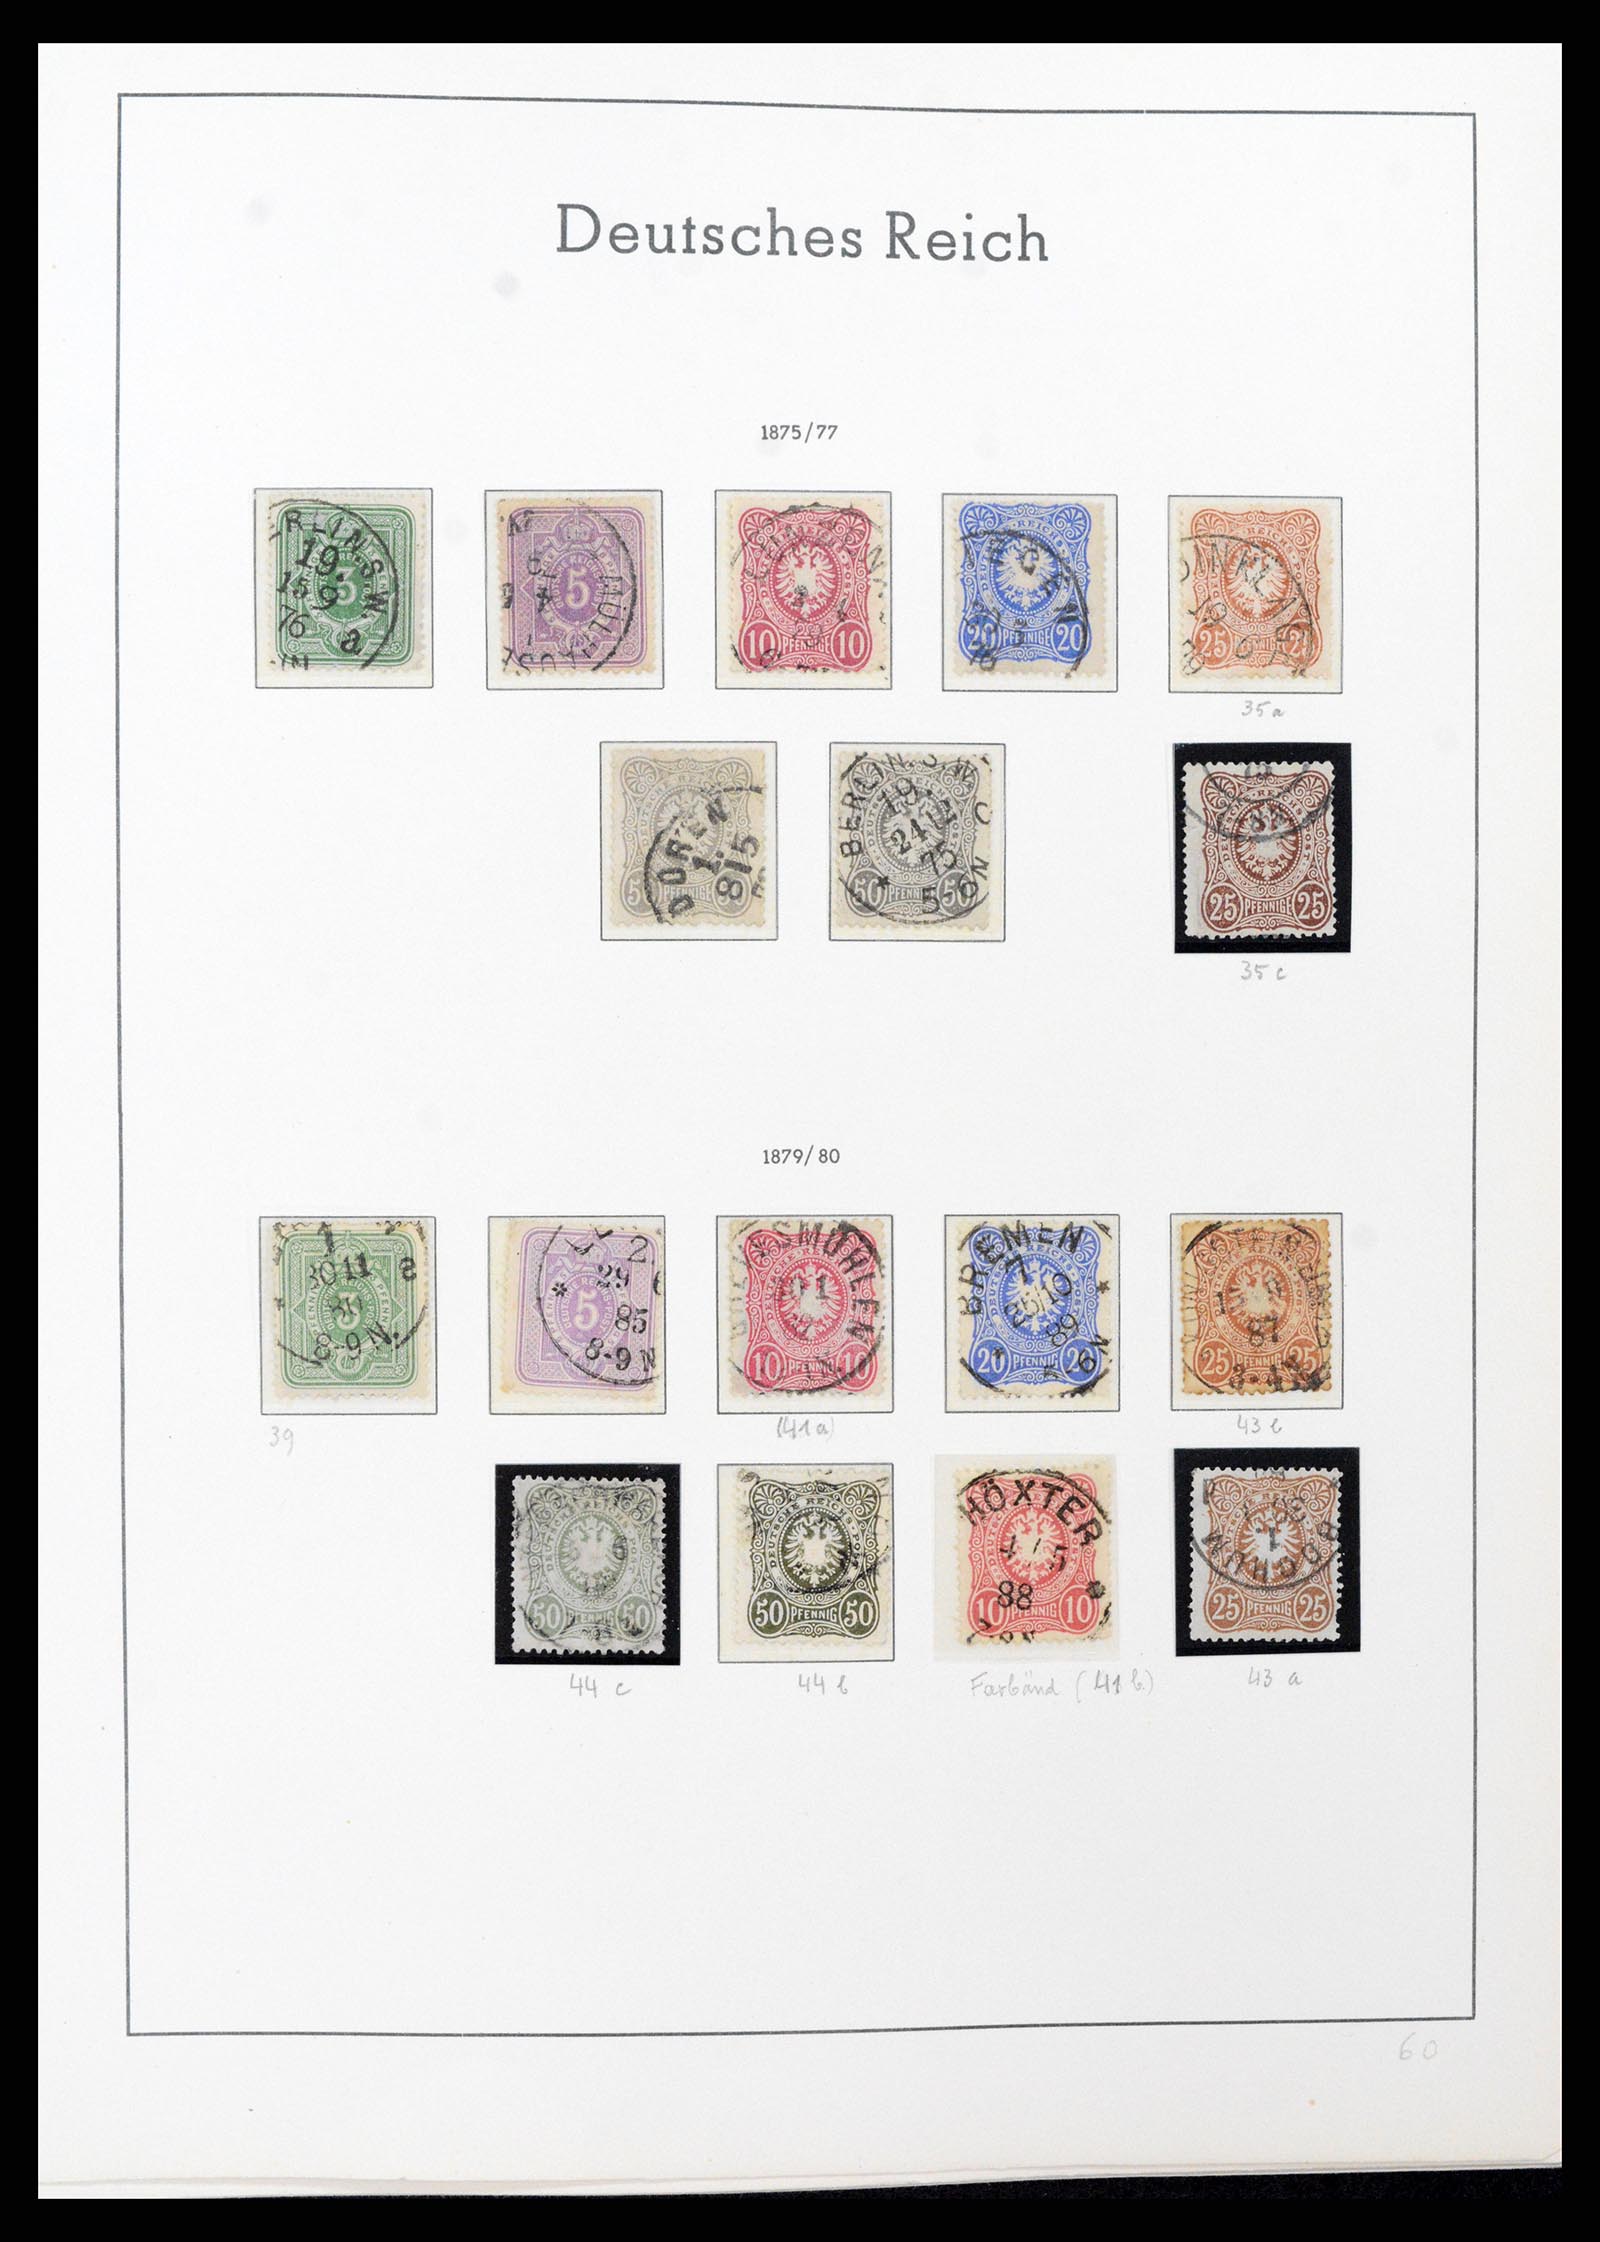 37589 004 - Stamp collection 37589 German Reich 1872-1945.